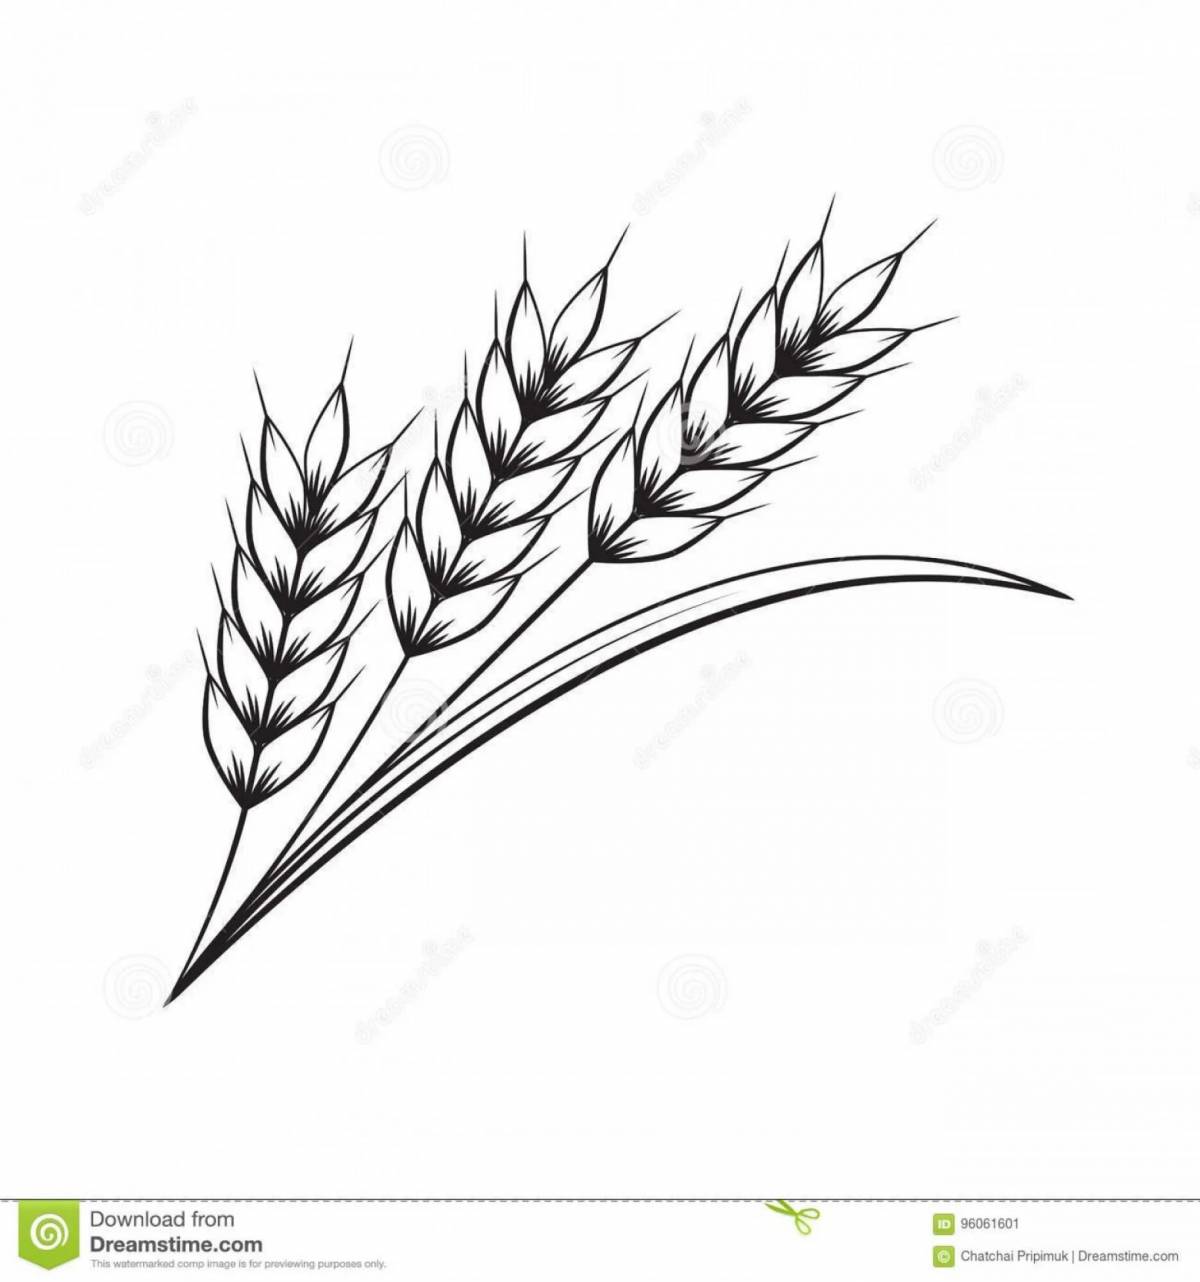 Grain #17